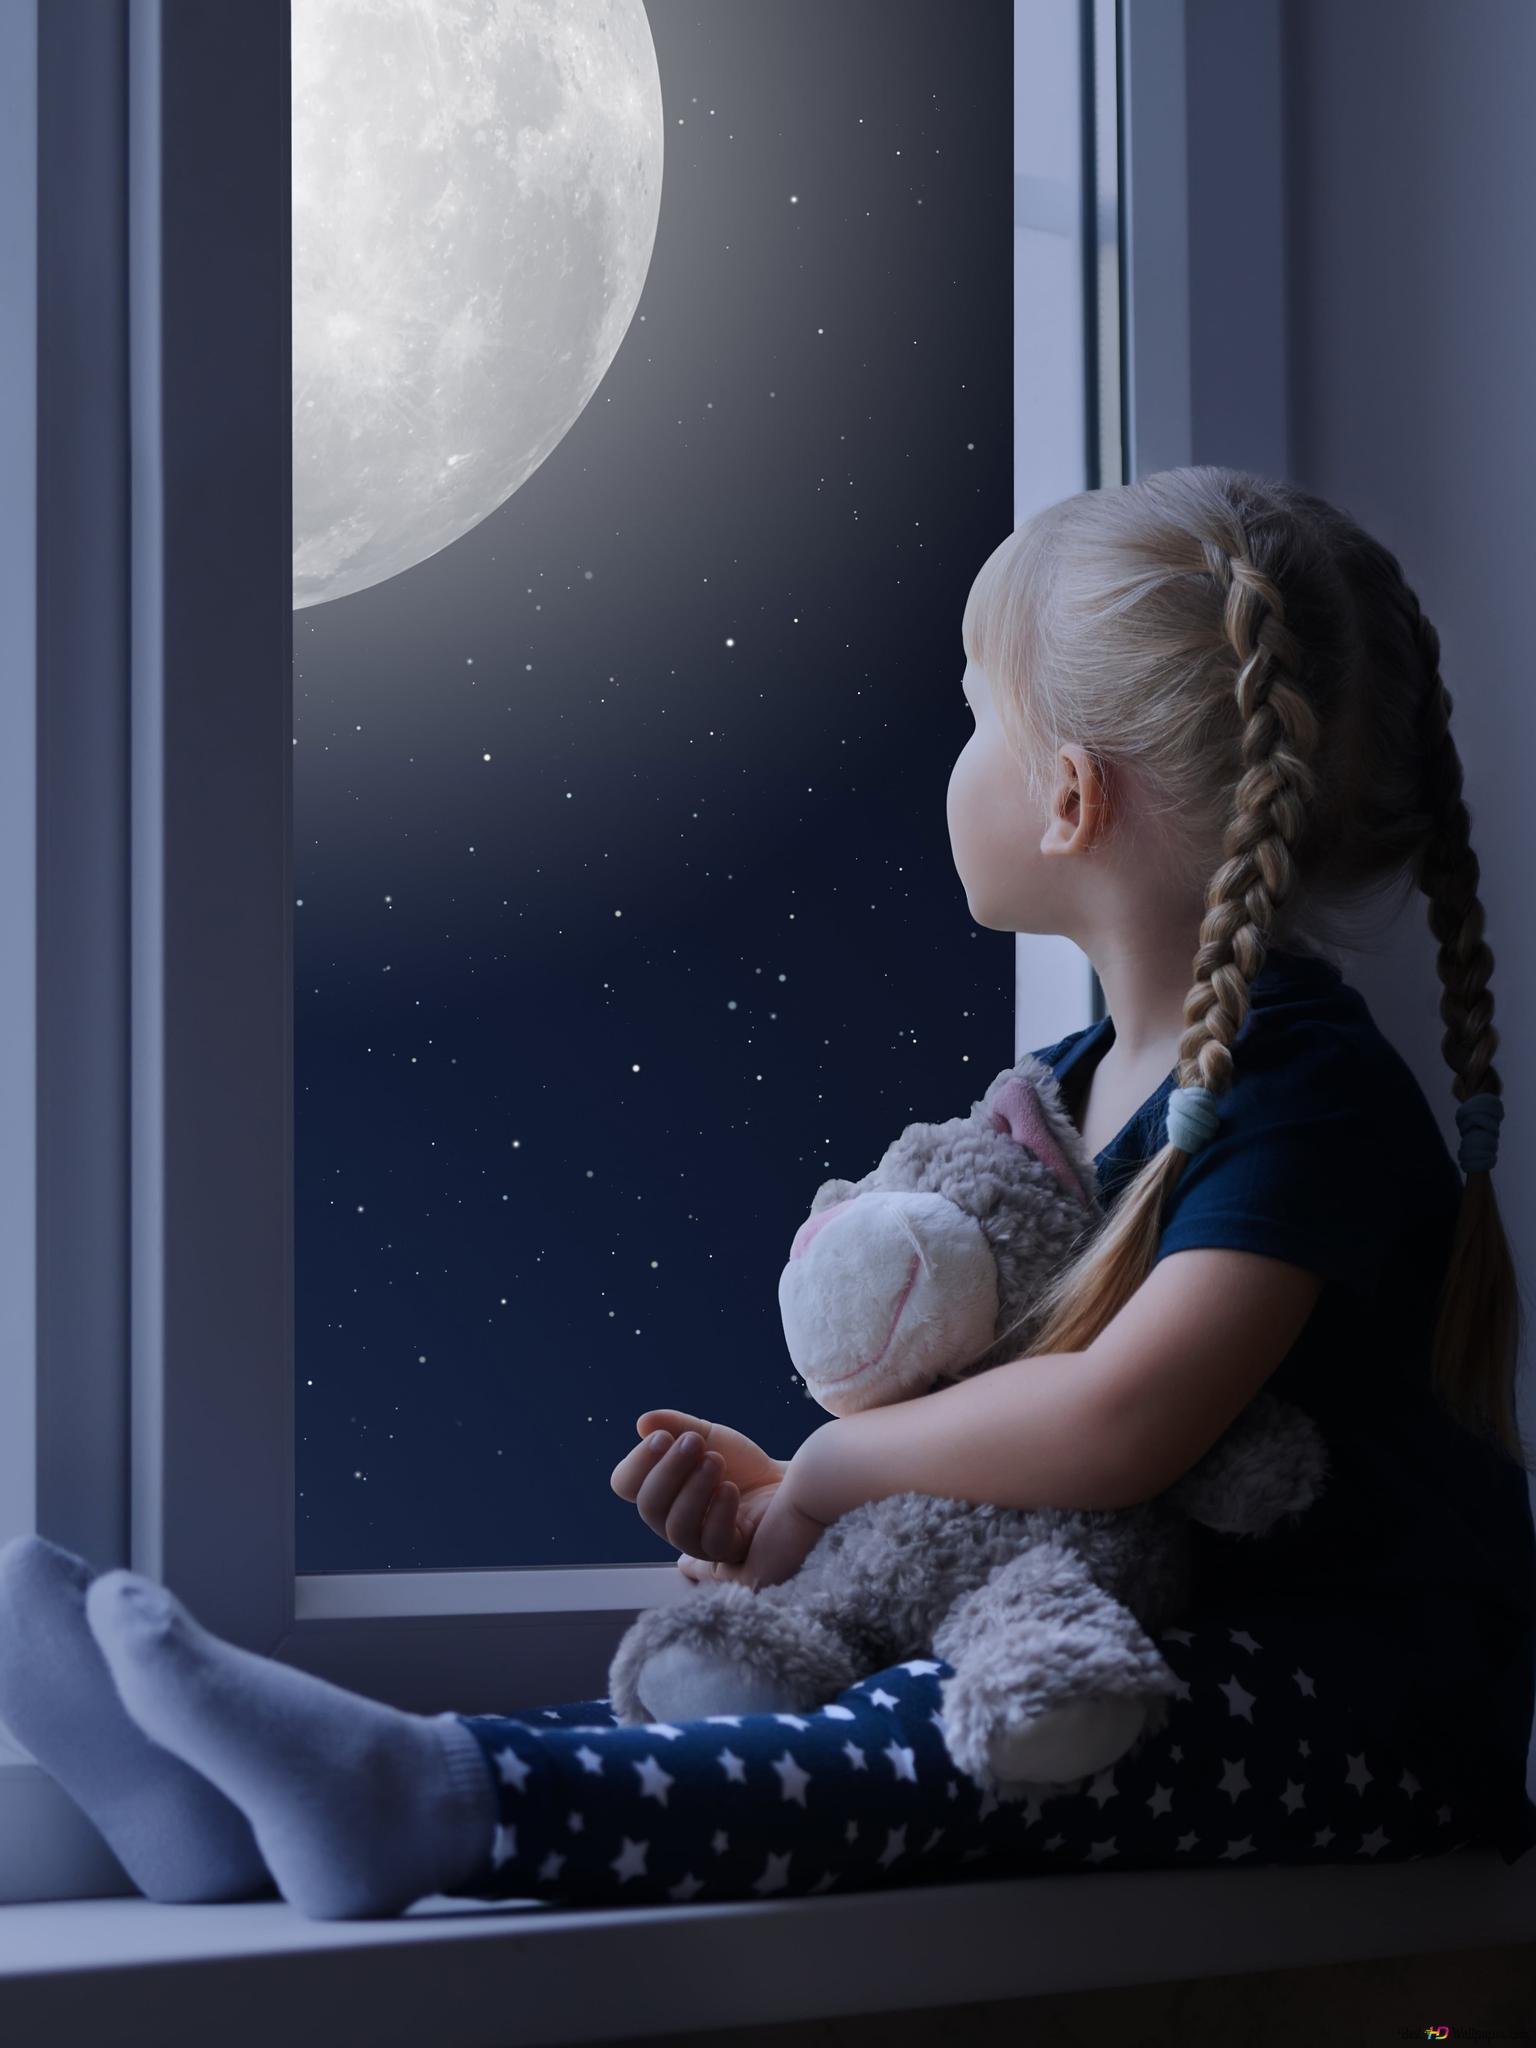 Мама сидит у окна. Дети ждут. Ребенок у окна. Луна в окне. Ребенок ждет чуда.